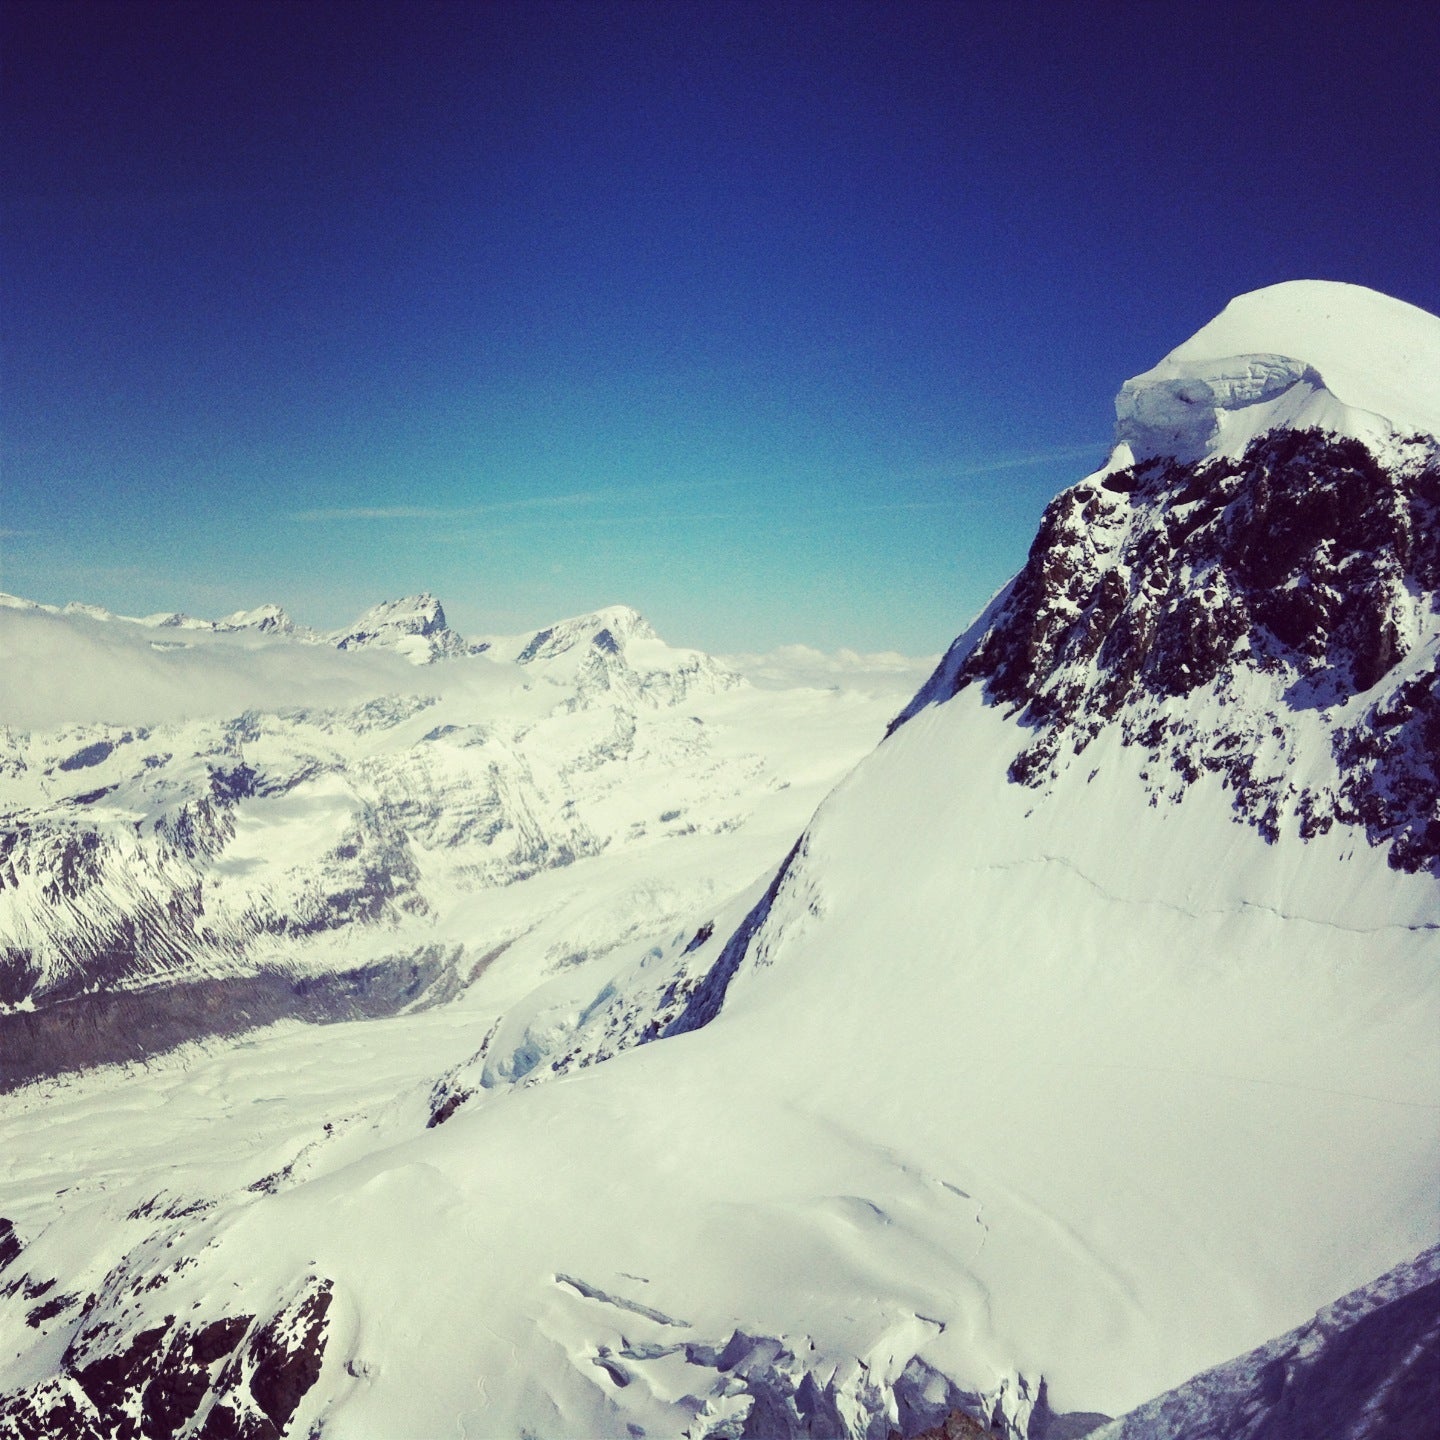 Matterhorn Ski Paradise